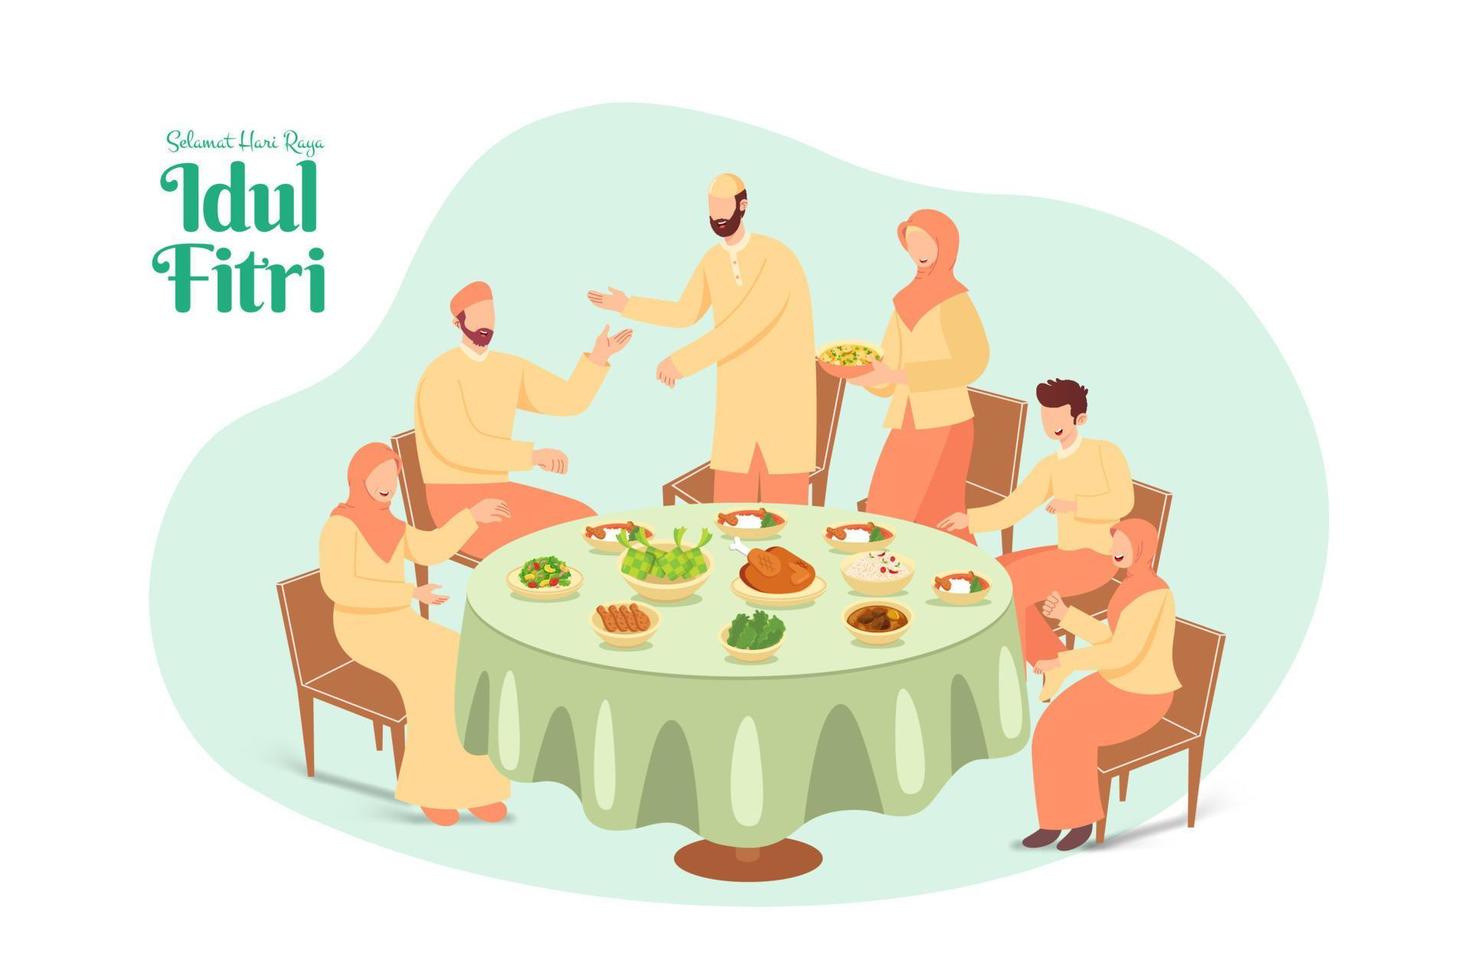 selamat hari raya idul fitri est une autre langue de joyeux eid mubarak en indonésien. vecteur